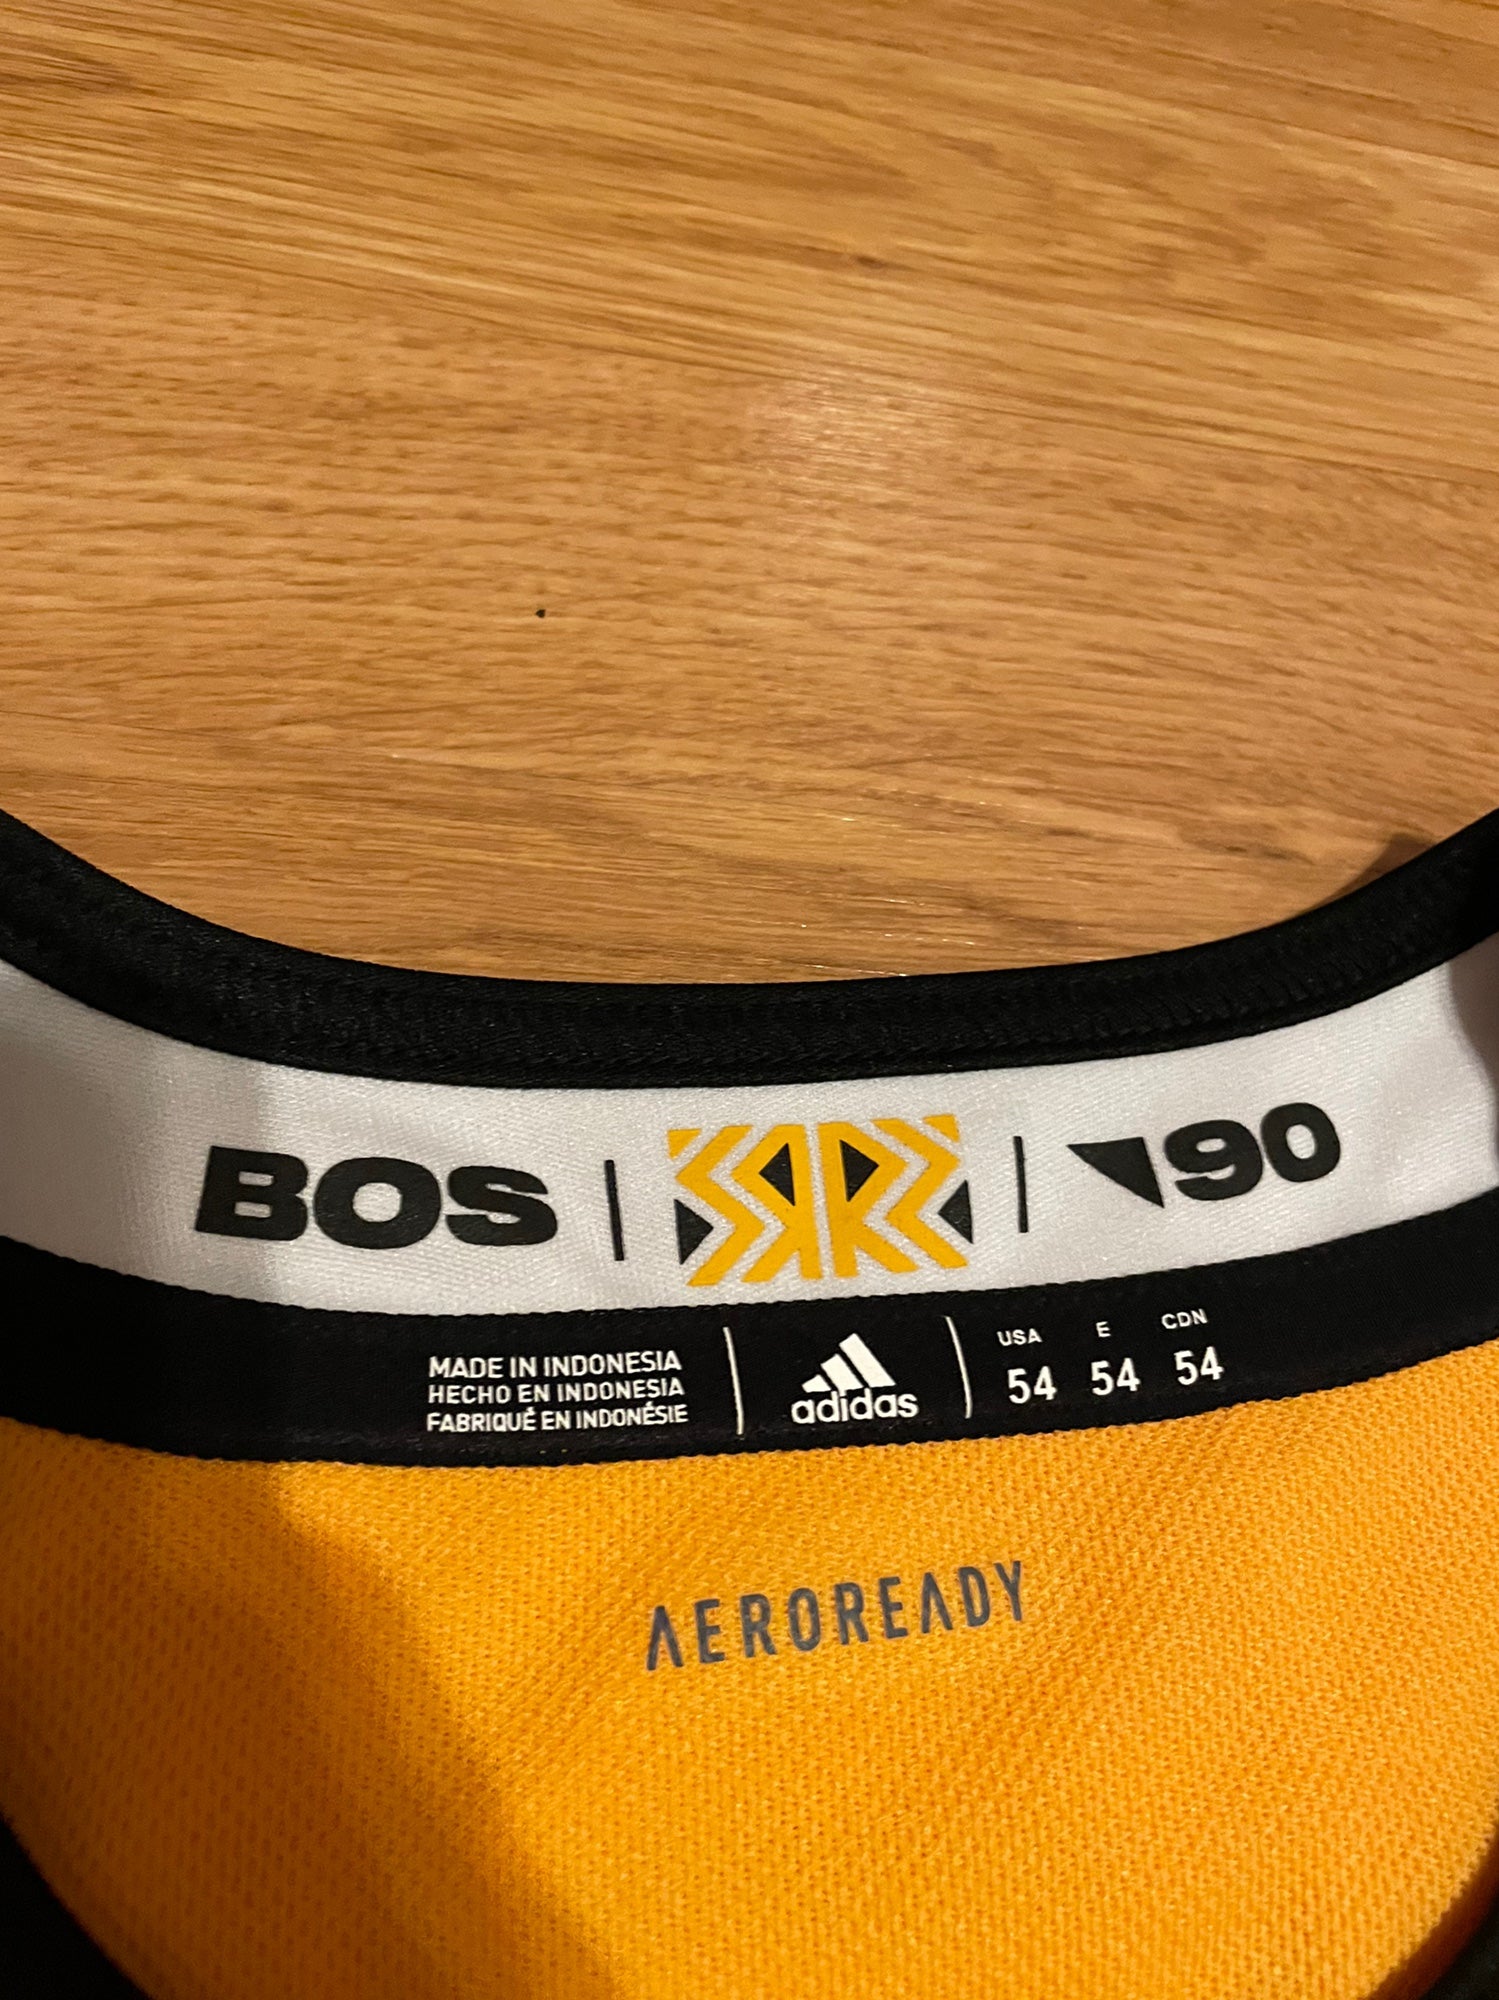 Patrice Bergeron Boston Bruins adidas 2020/21 Reverse Retro Authentic  Player Jersey - Yellow